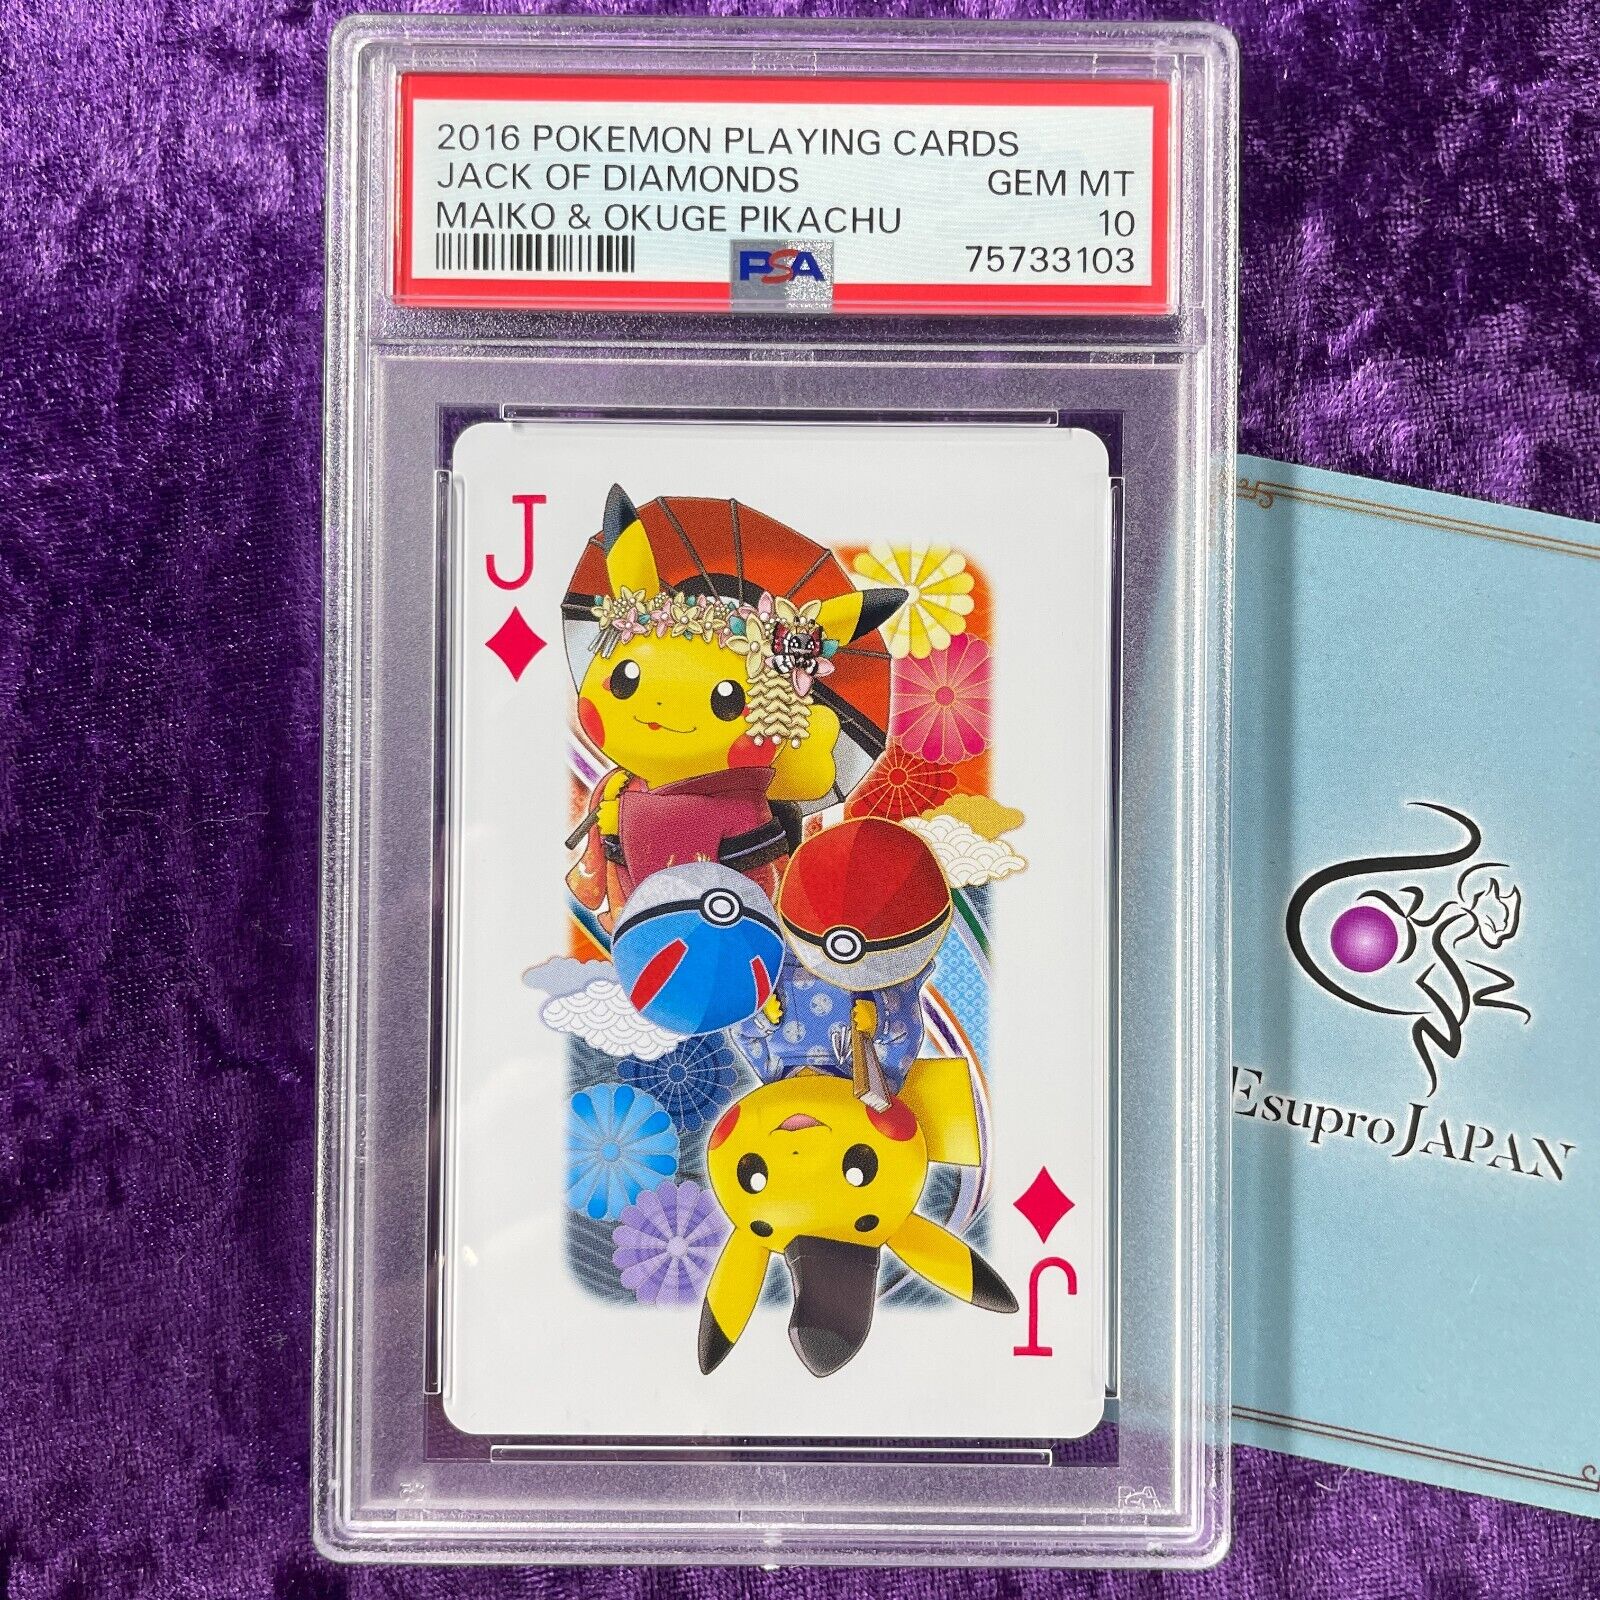 PSA 10 2016 Pokemon Playing Cards Maiko Pikachu & Okuge Pikachu Jack of Diamonds